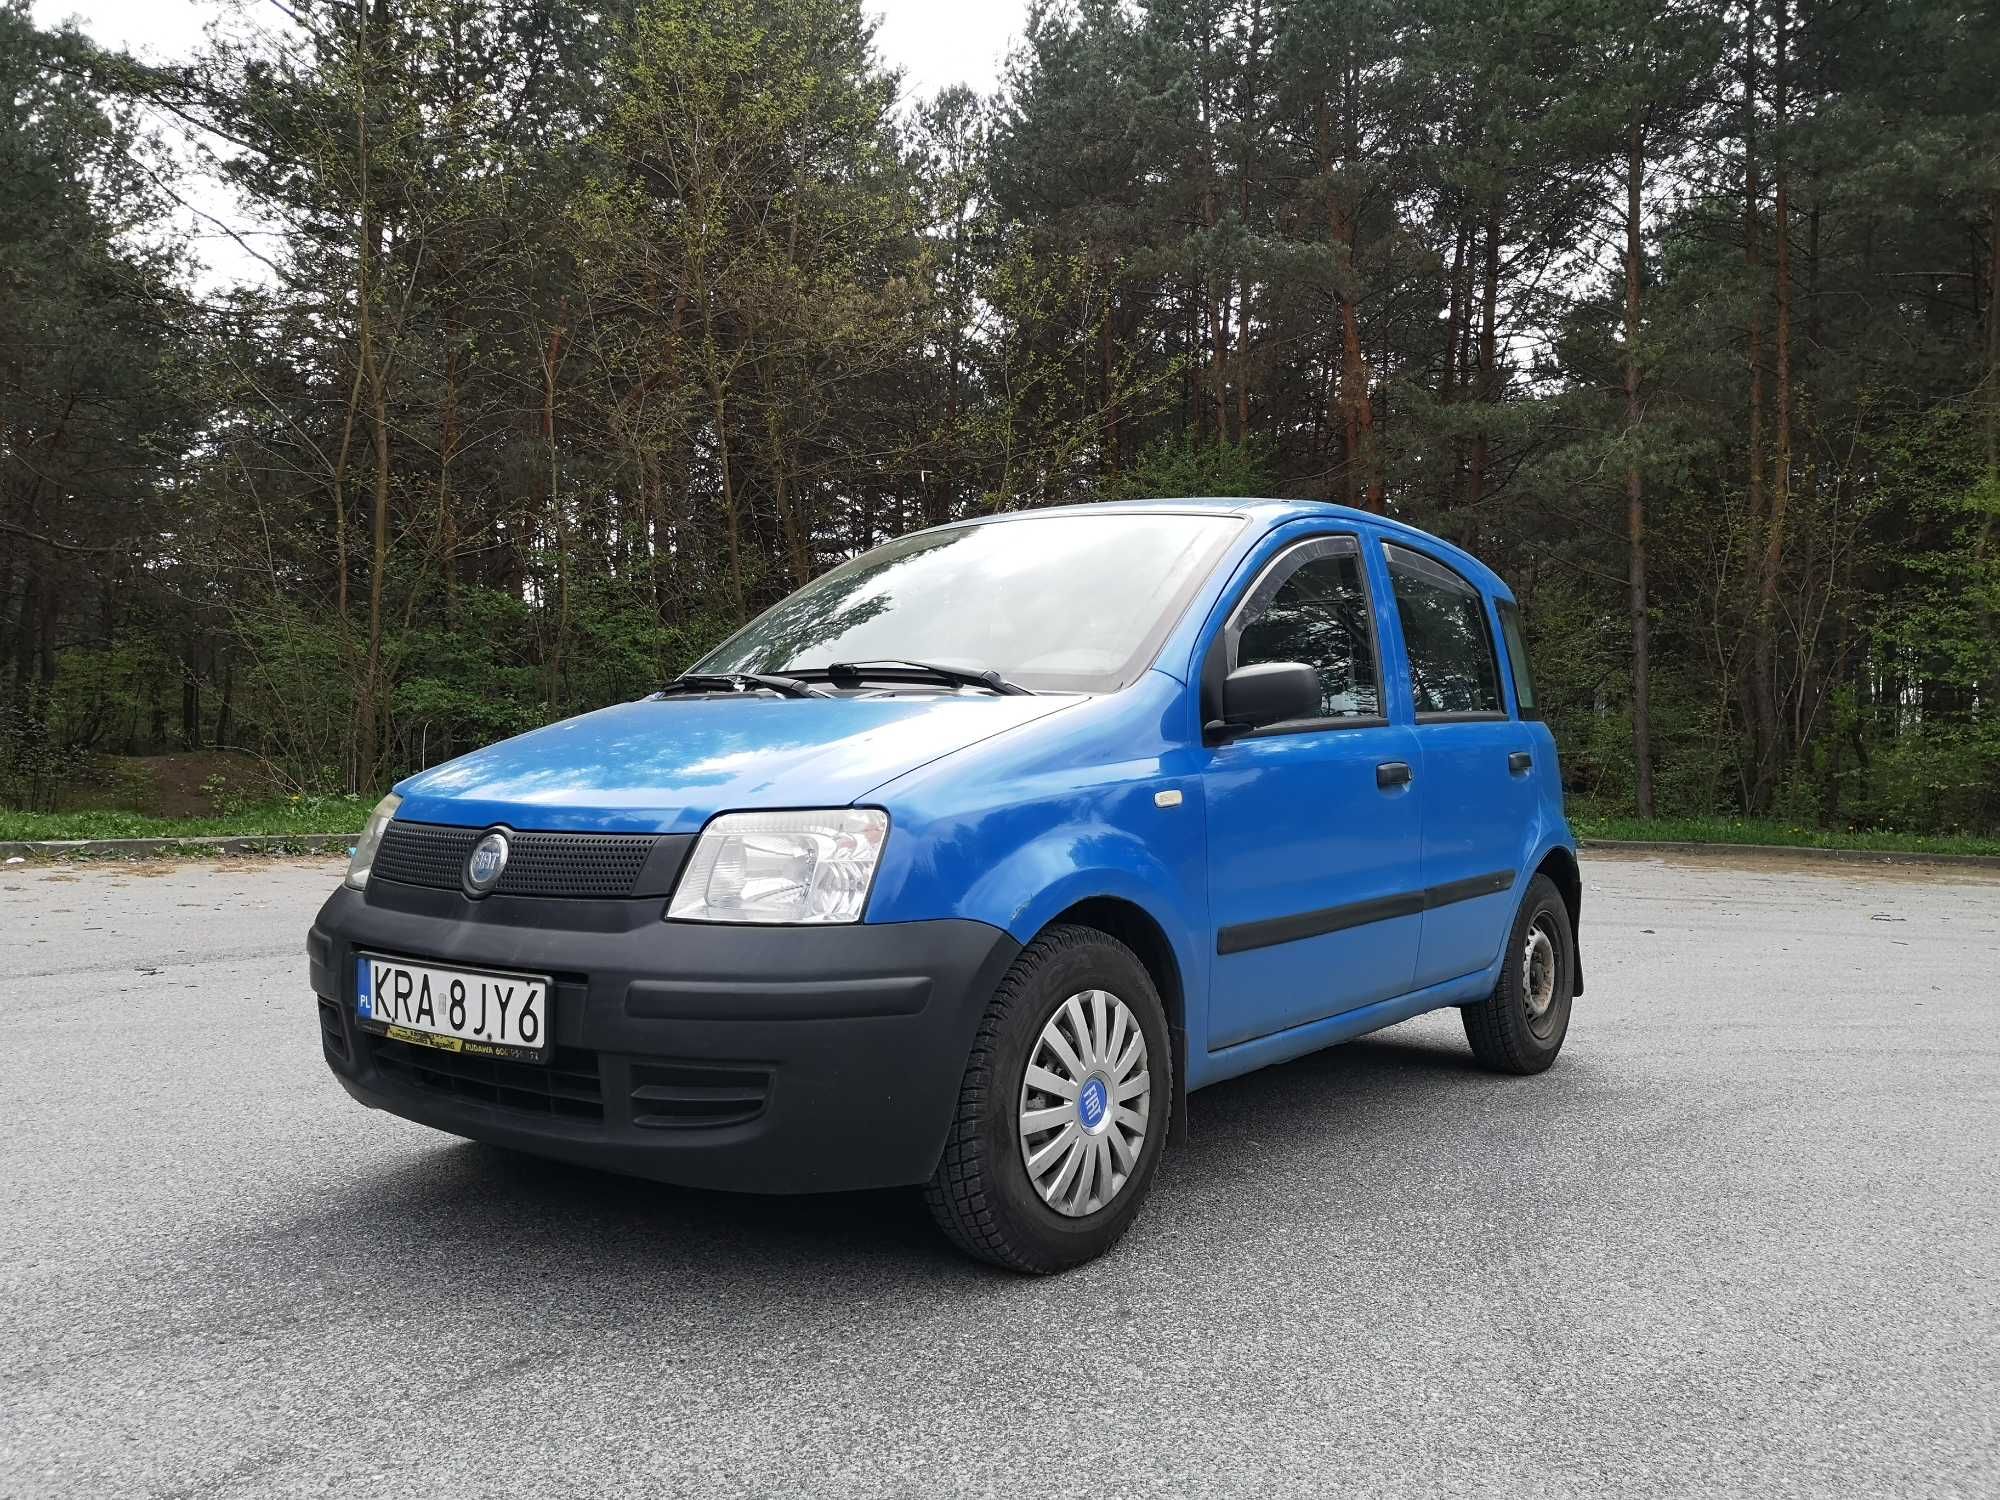 Fiat Panda 1.1 2003 rok